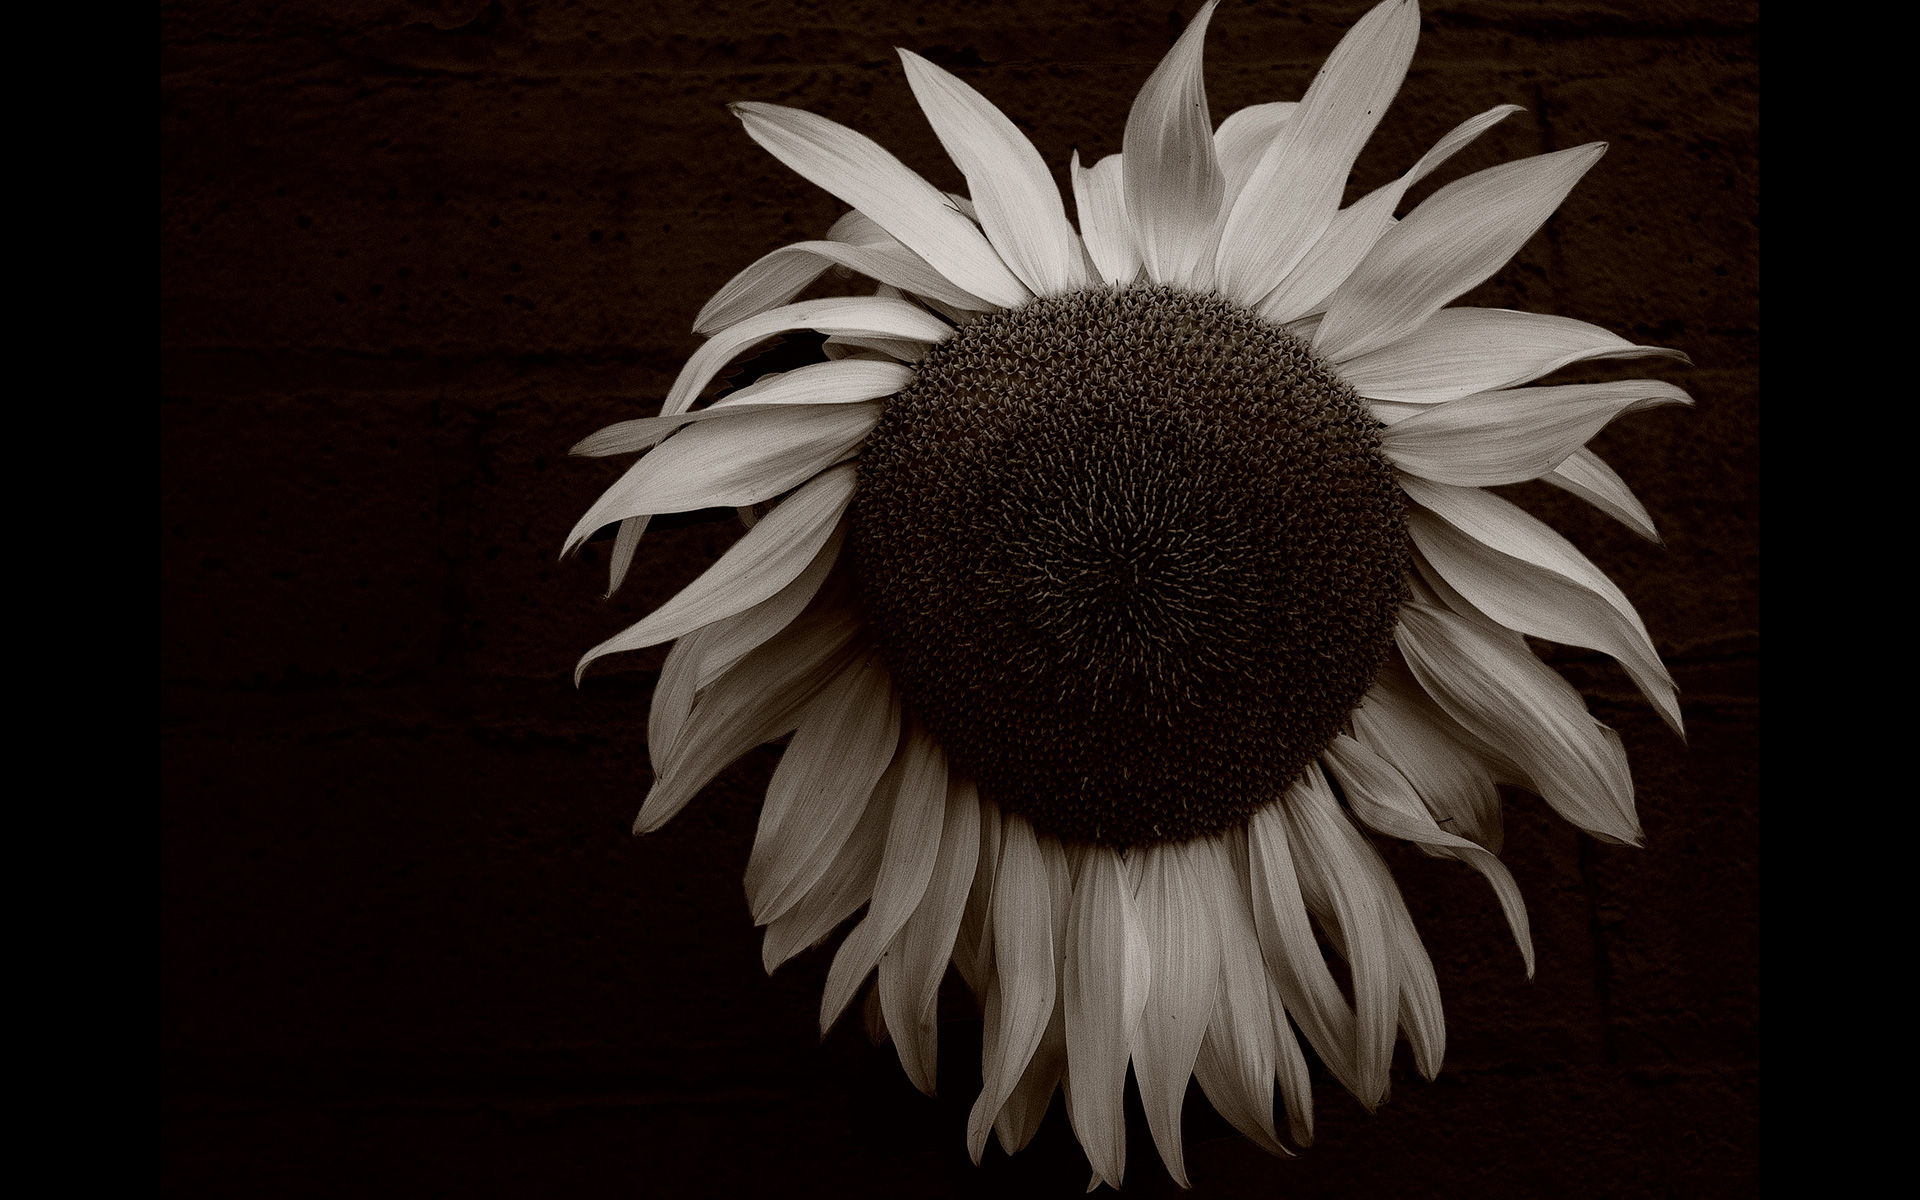 client: sunflower